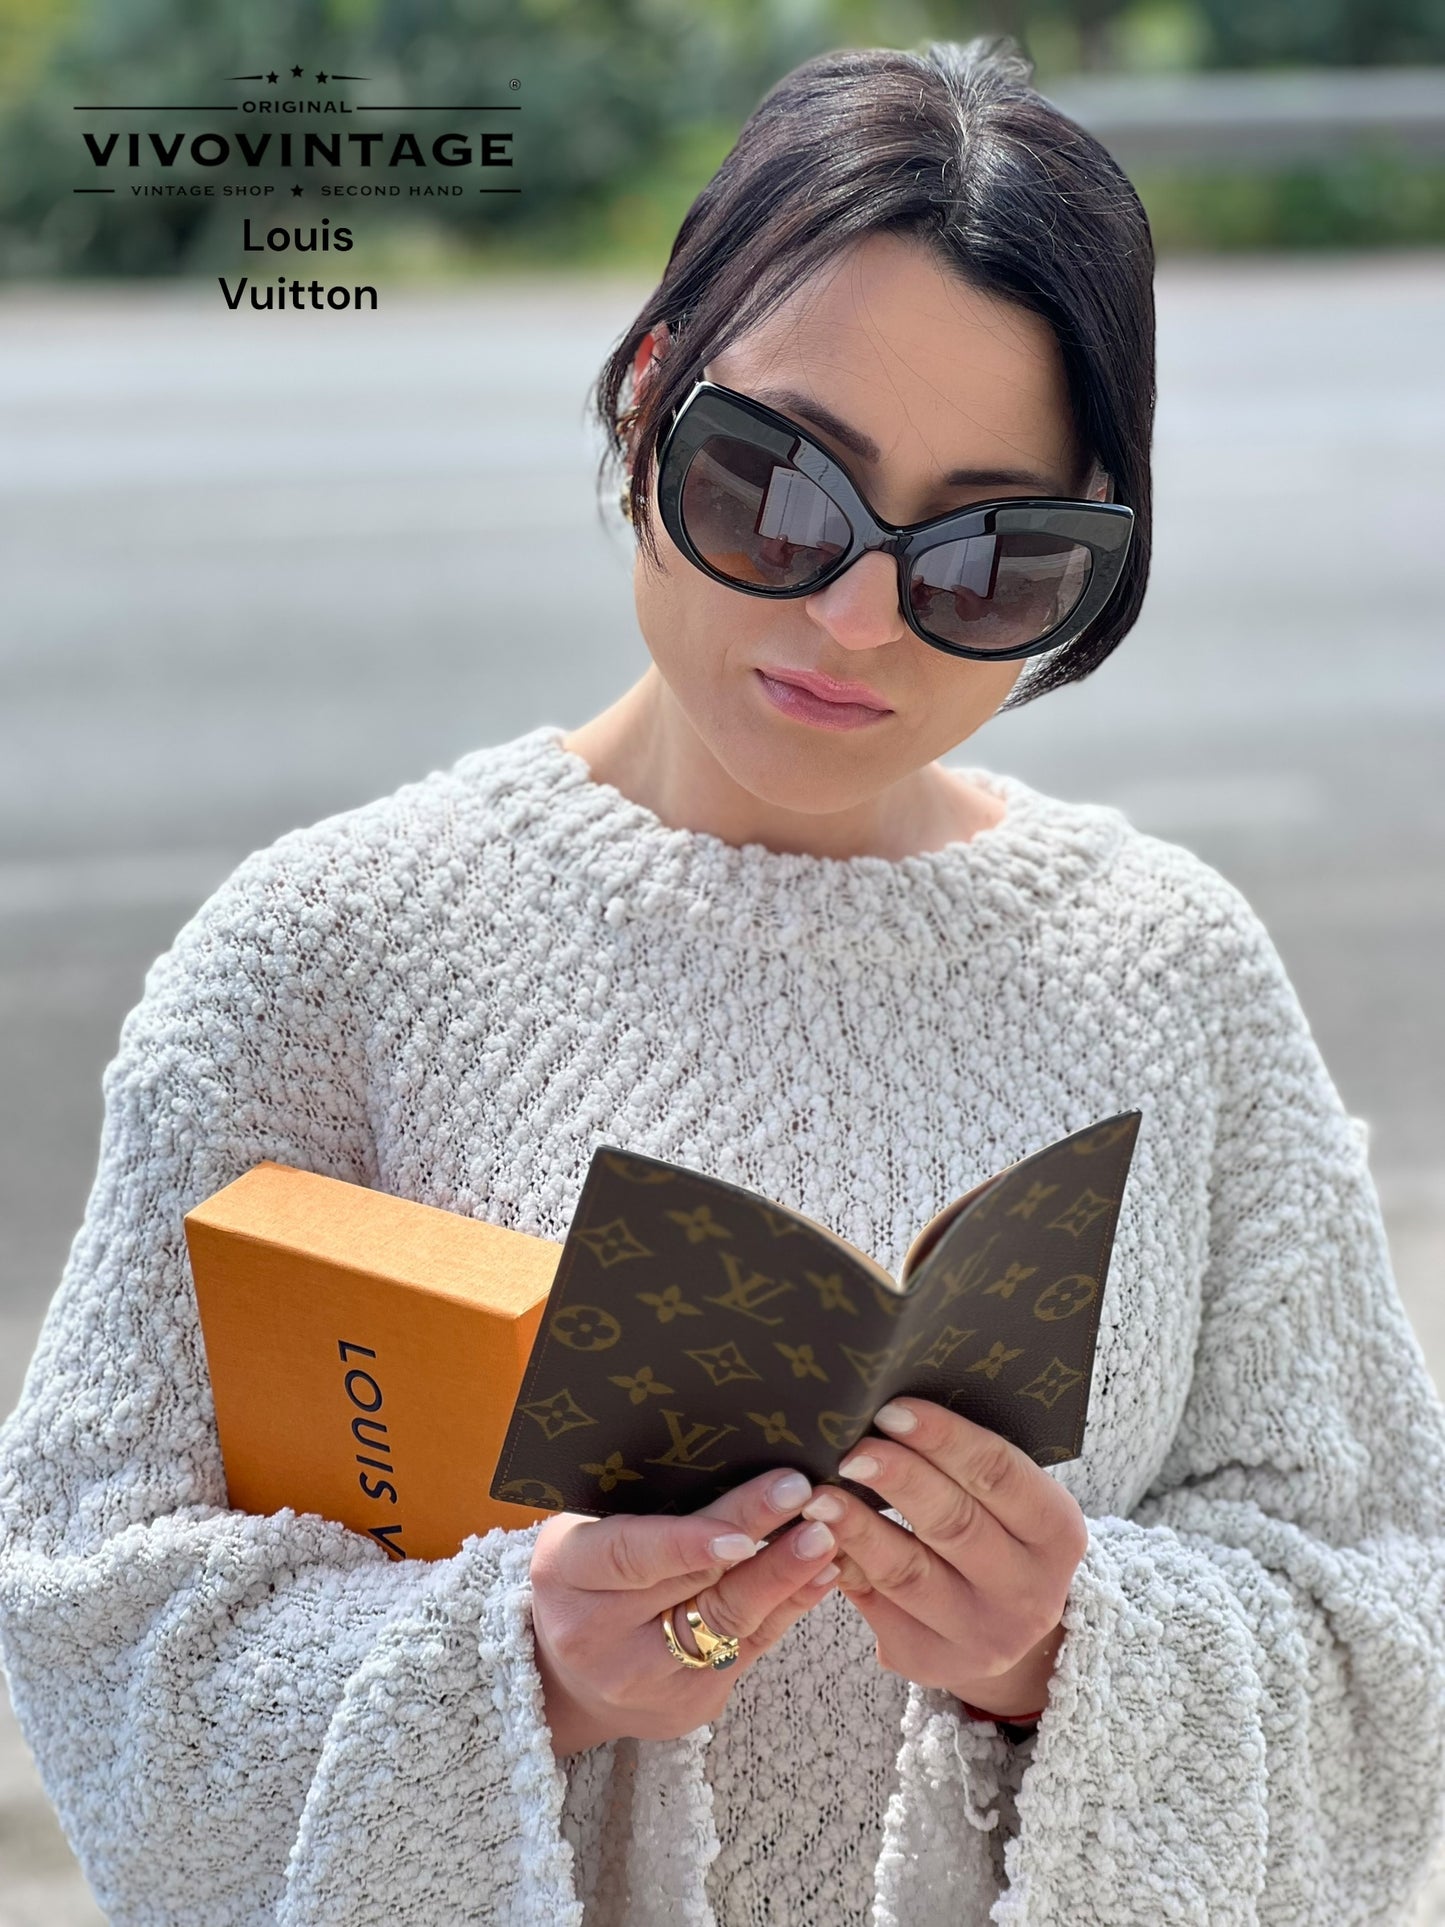 Porta Agenda Louis Vuitton vintage